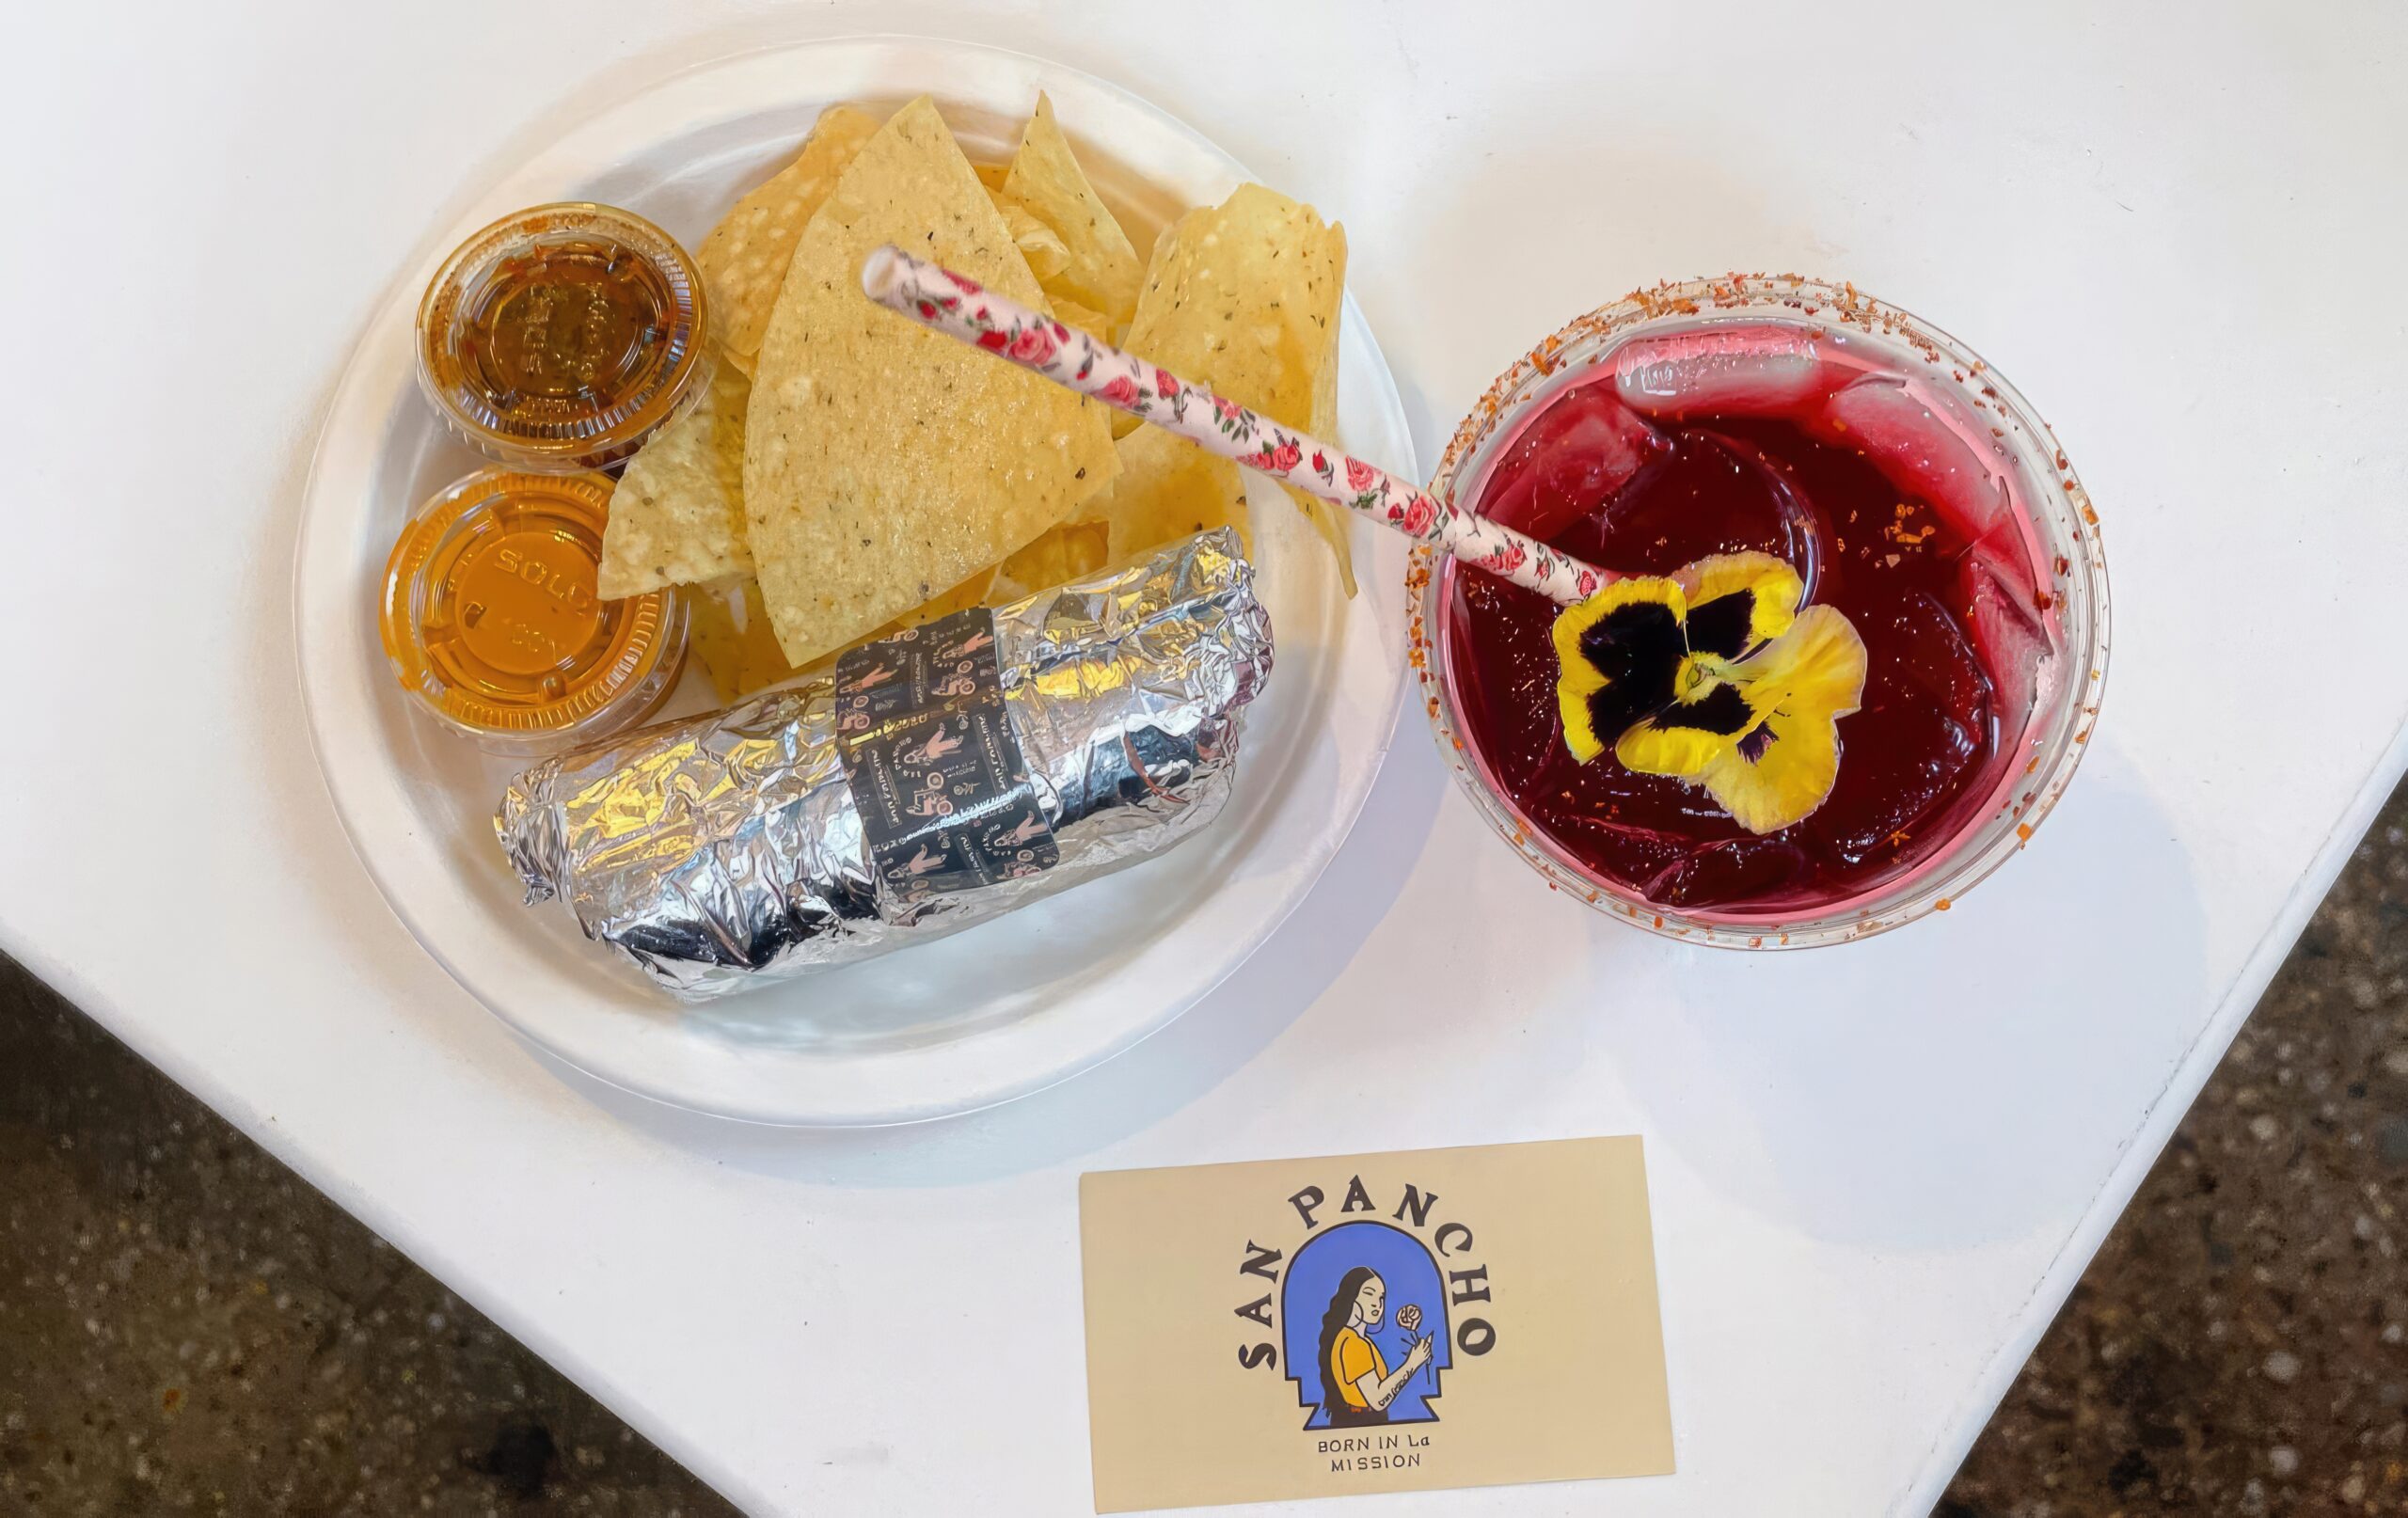 San Pancho Burritos是《华盛顿人》杂志“华盛顿地区即将开业的27家令人兴奋的新餐厅”名单之一